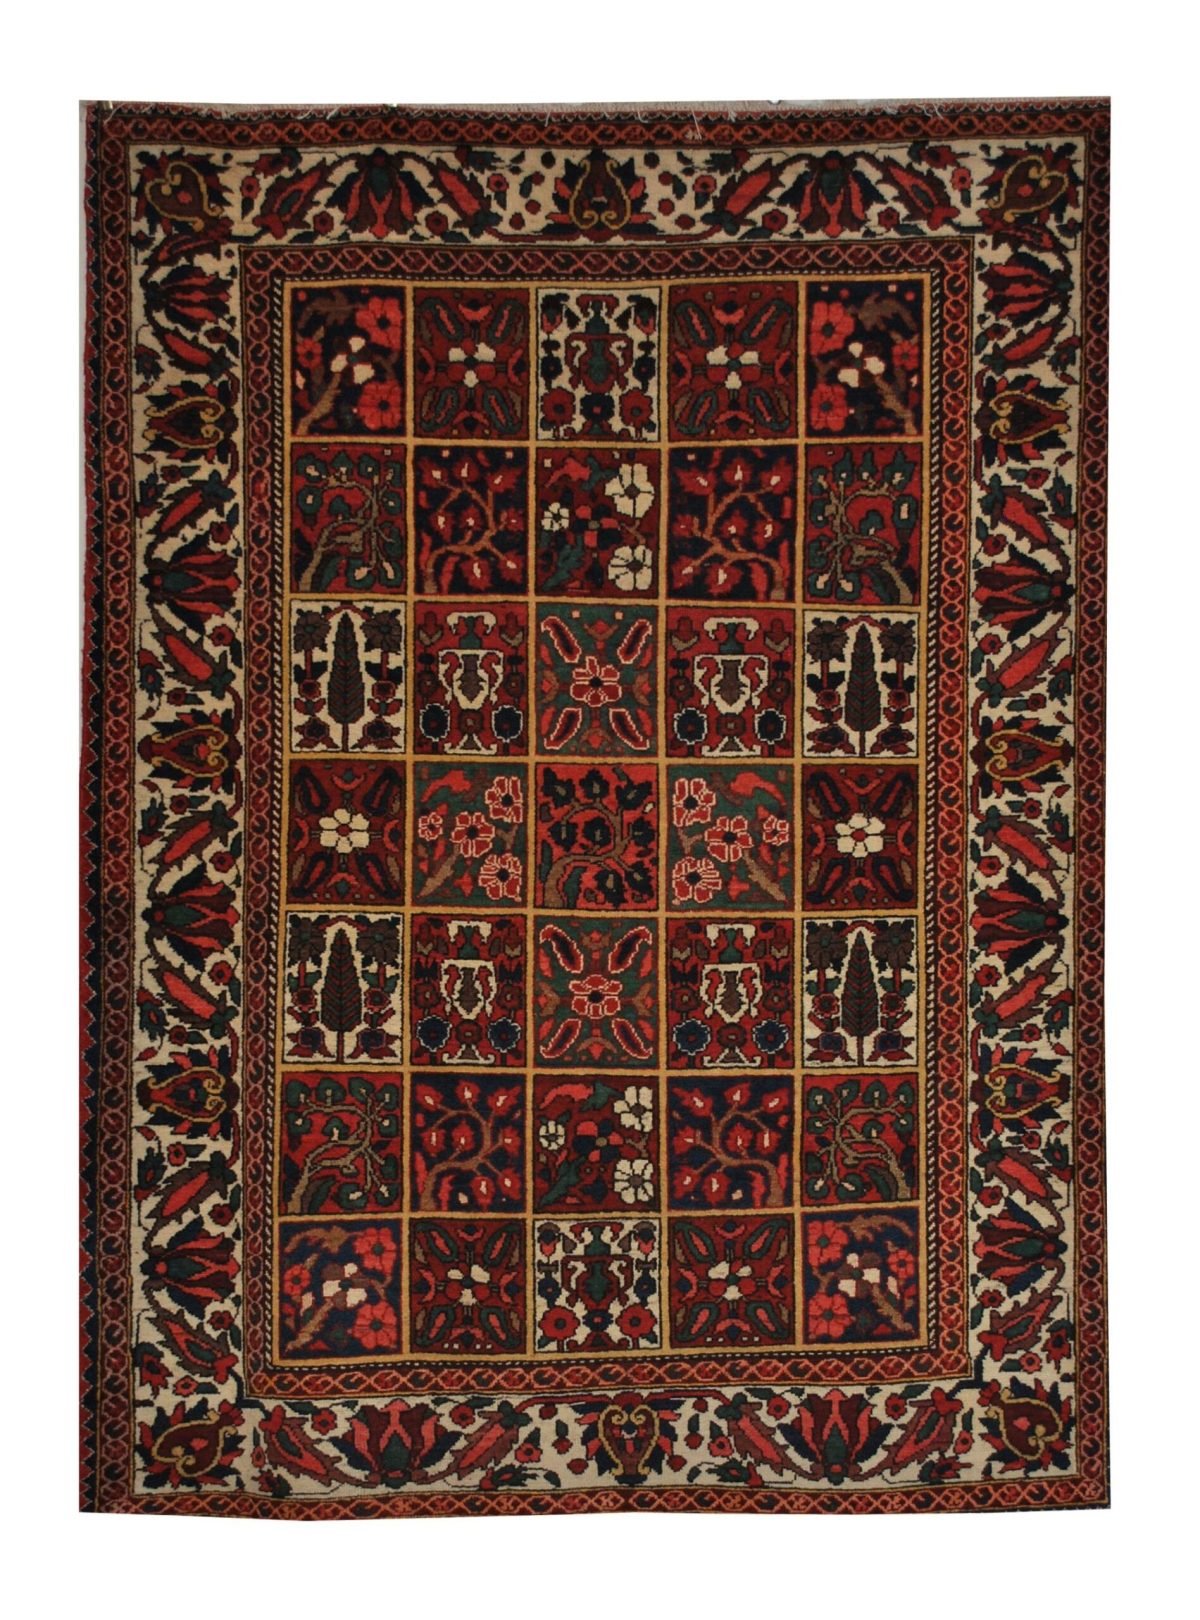 Antique Persian Bakhtiari 5' 5" x 7' Handmade Wool Area Rug - Shabahang Royal Carpet